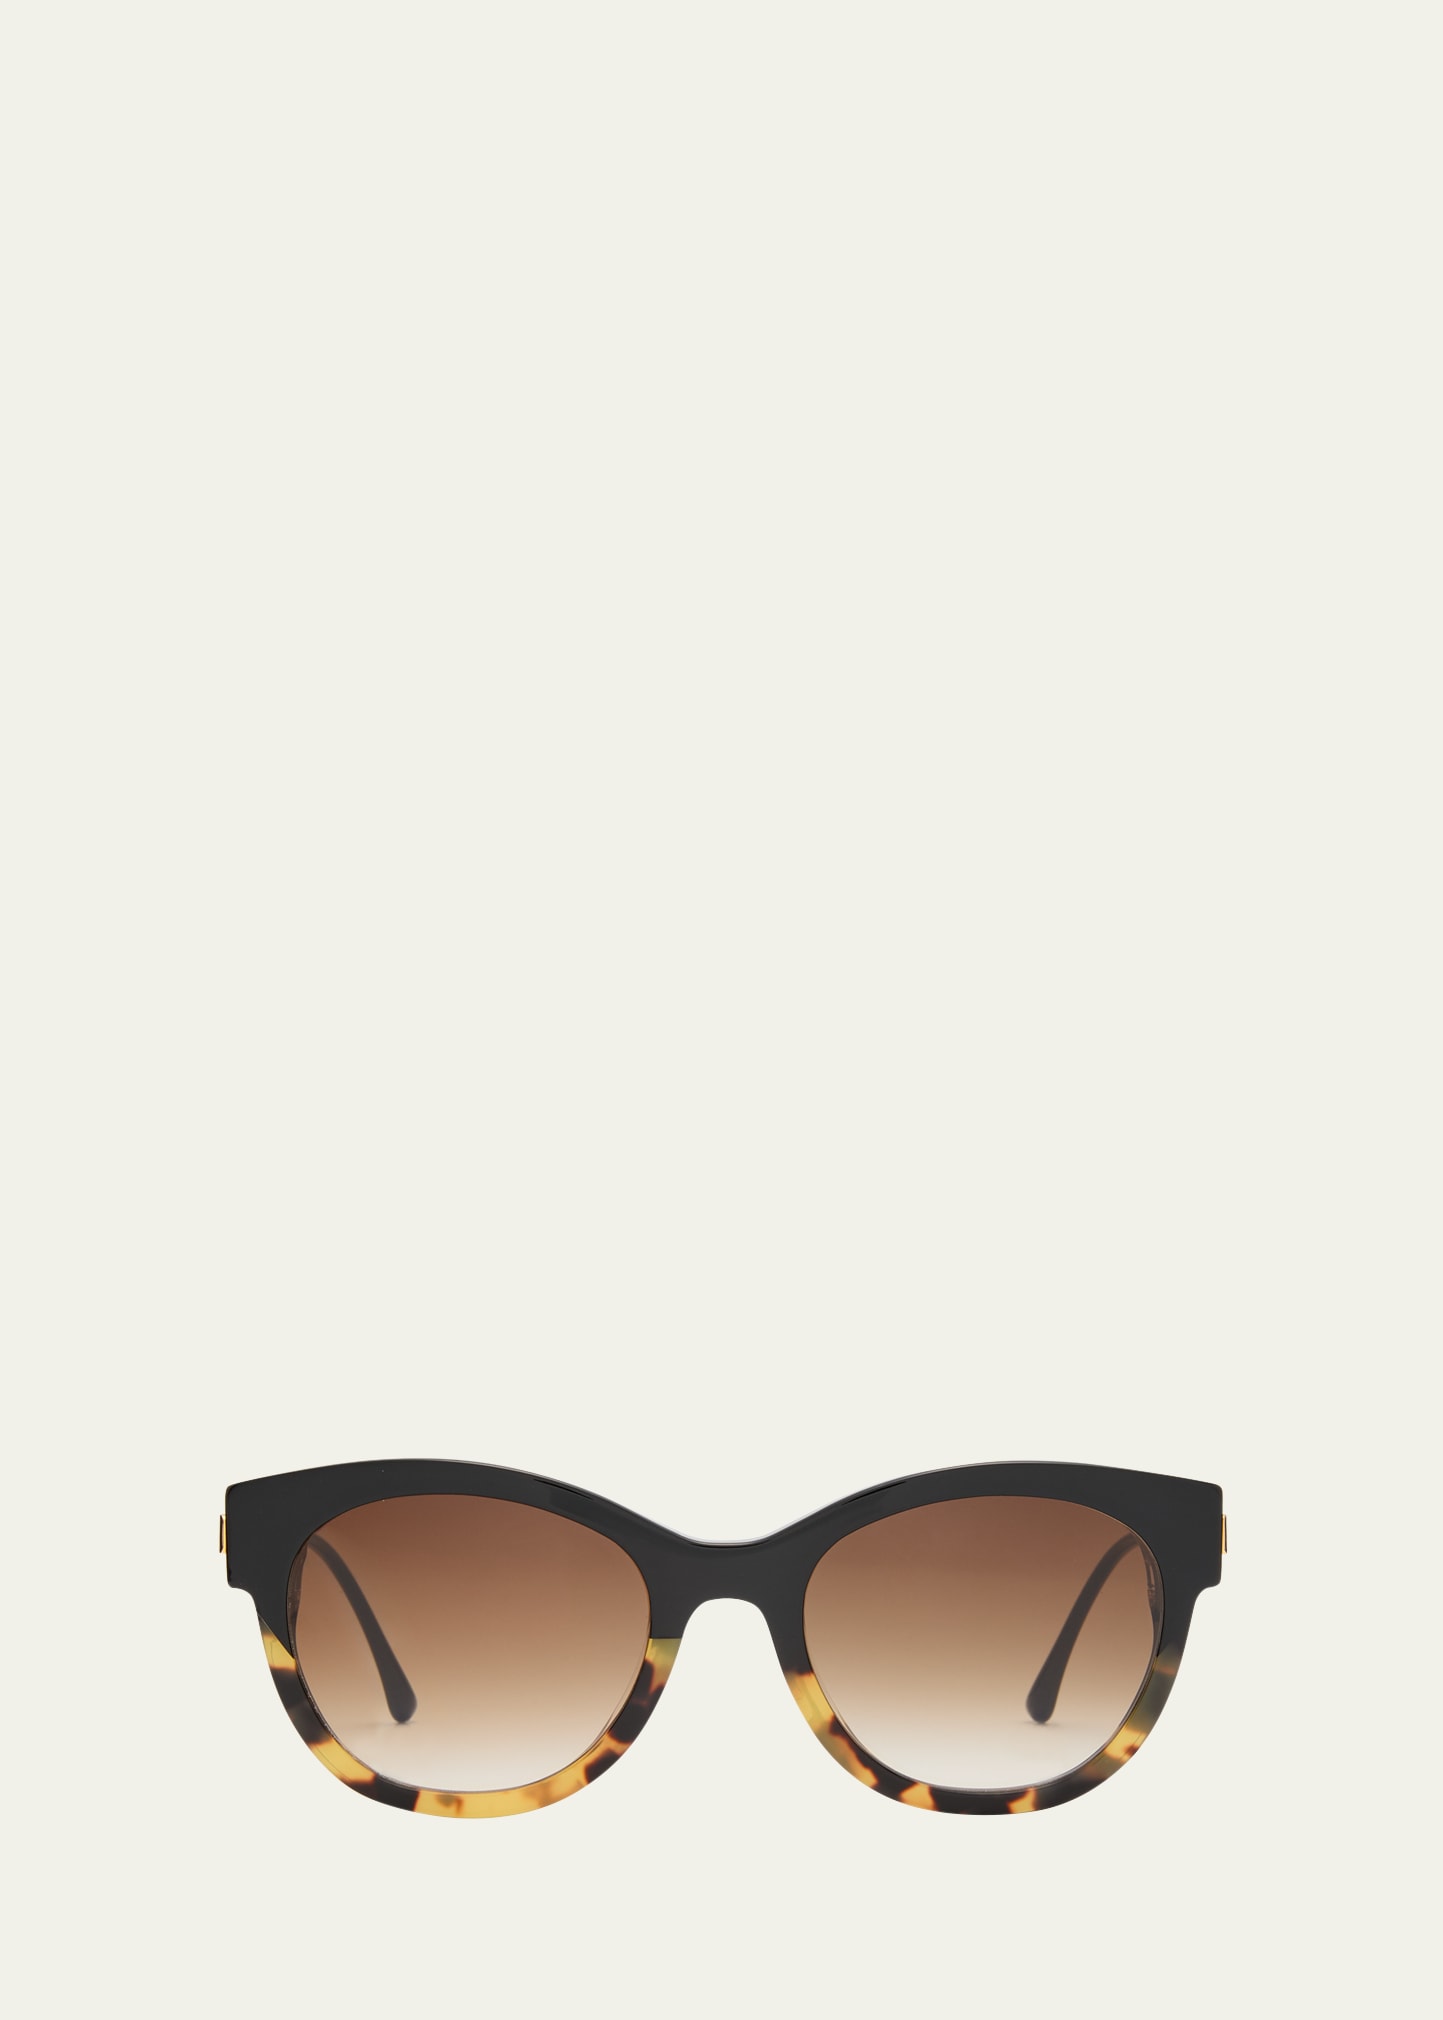 Thierry Lasry Peachy 101 Acetate & Metal Cat-eye Sunglasses In Brown